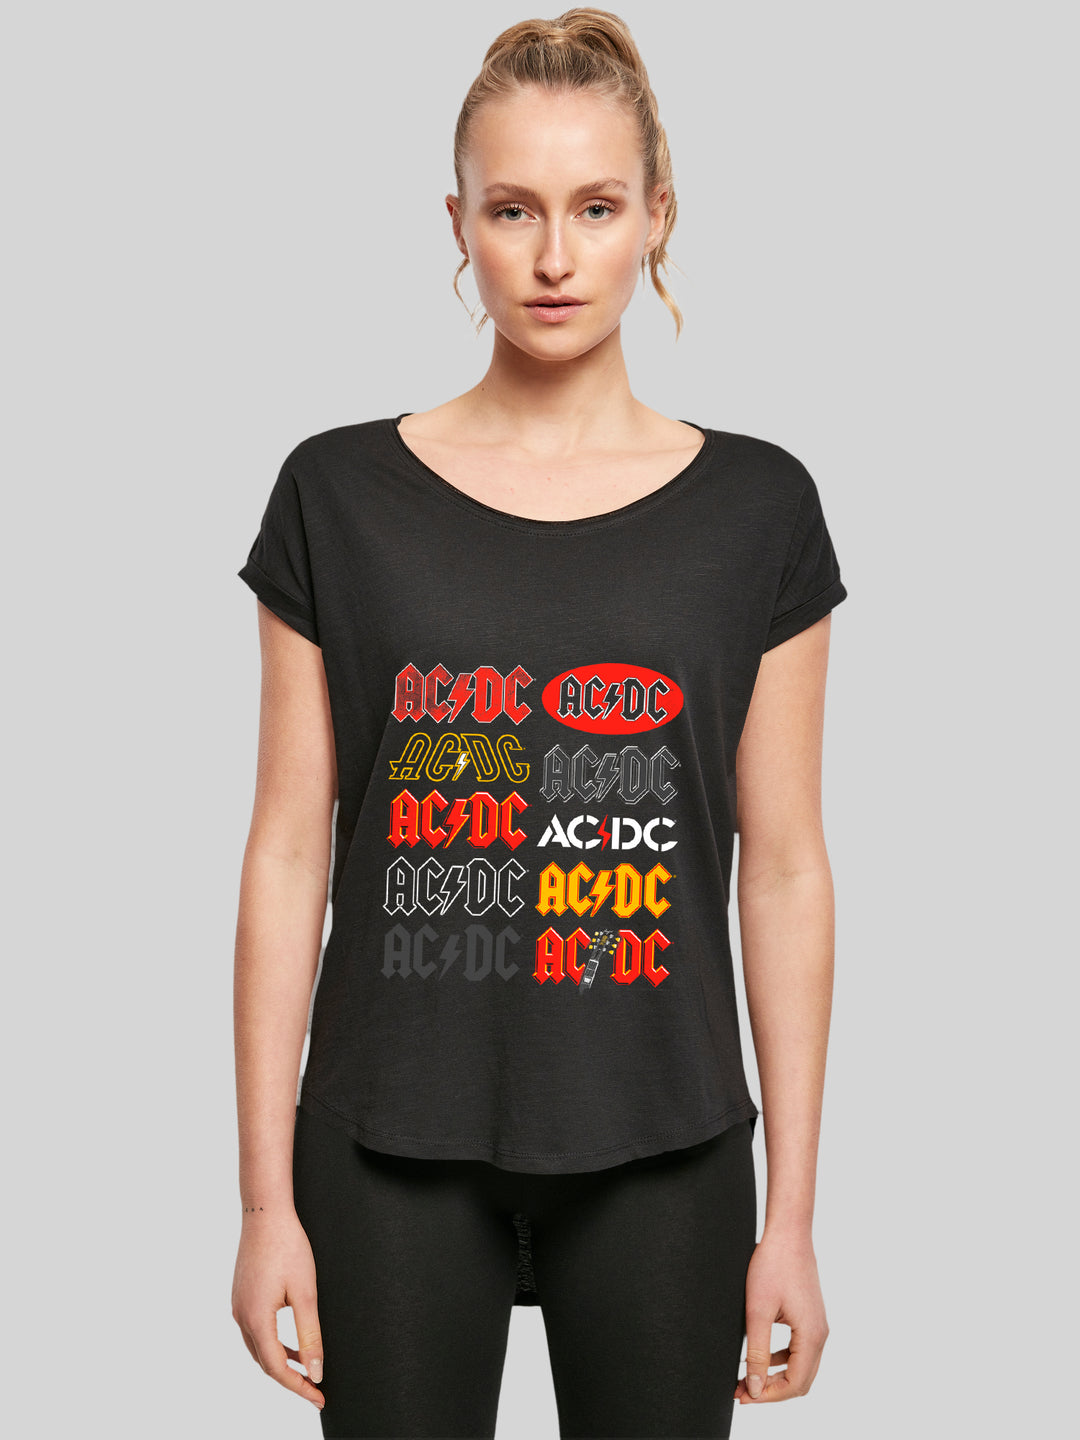 AC/DC Multi-Logo Ladies Long Slub Tee - A Stylish Tribute to Your Rock 'n' Roll Soul